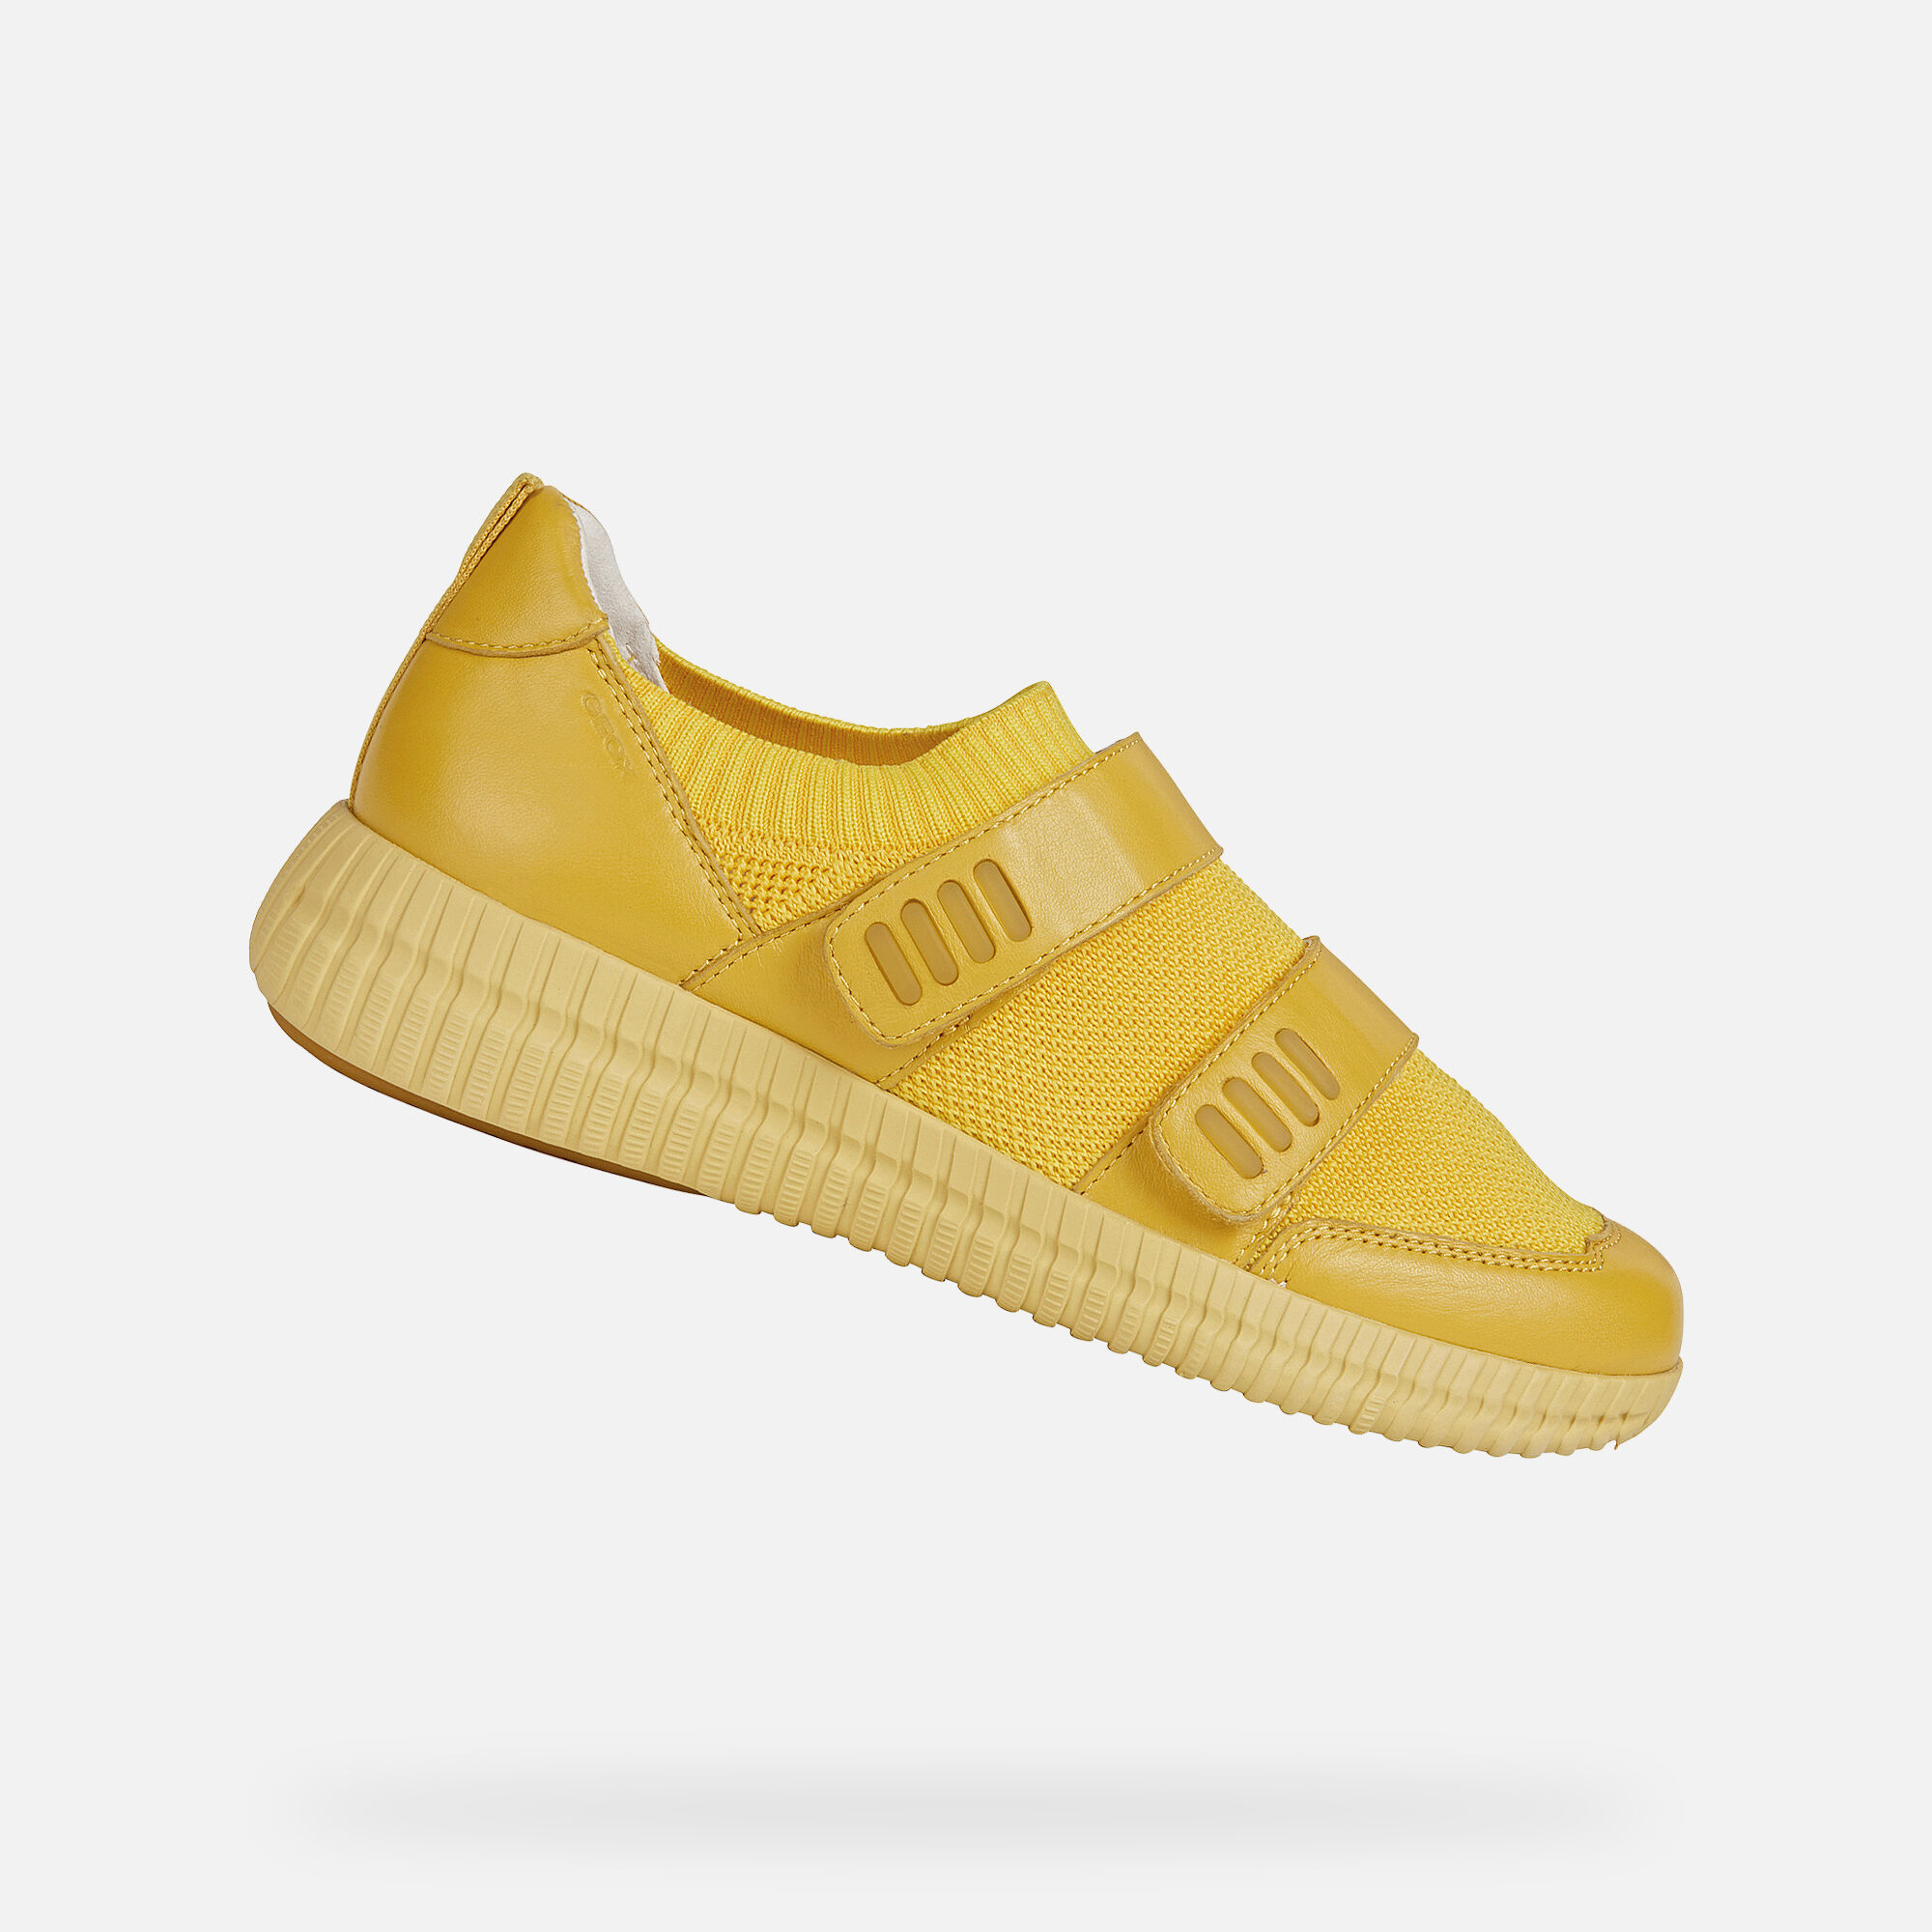 light yellow sneakers